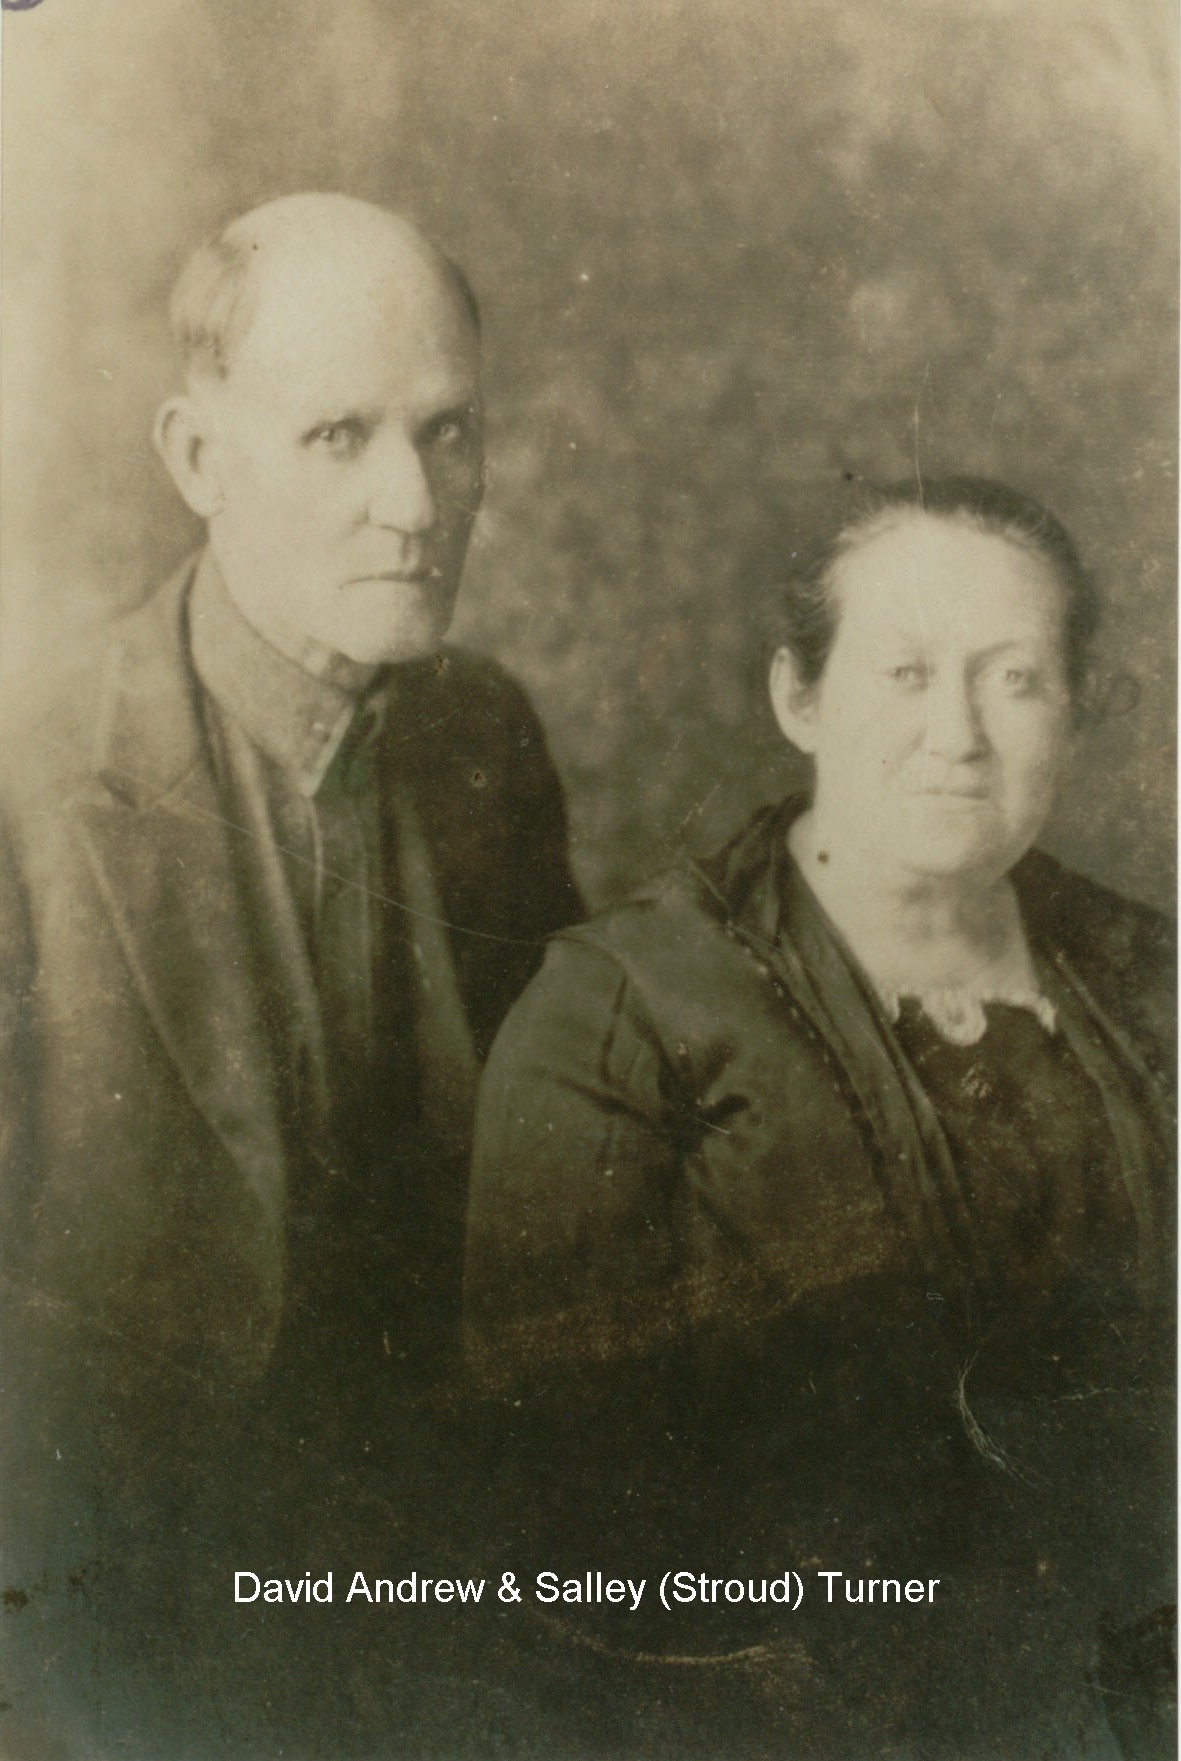 David and Sarah "Salley" (Stroud) Turner